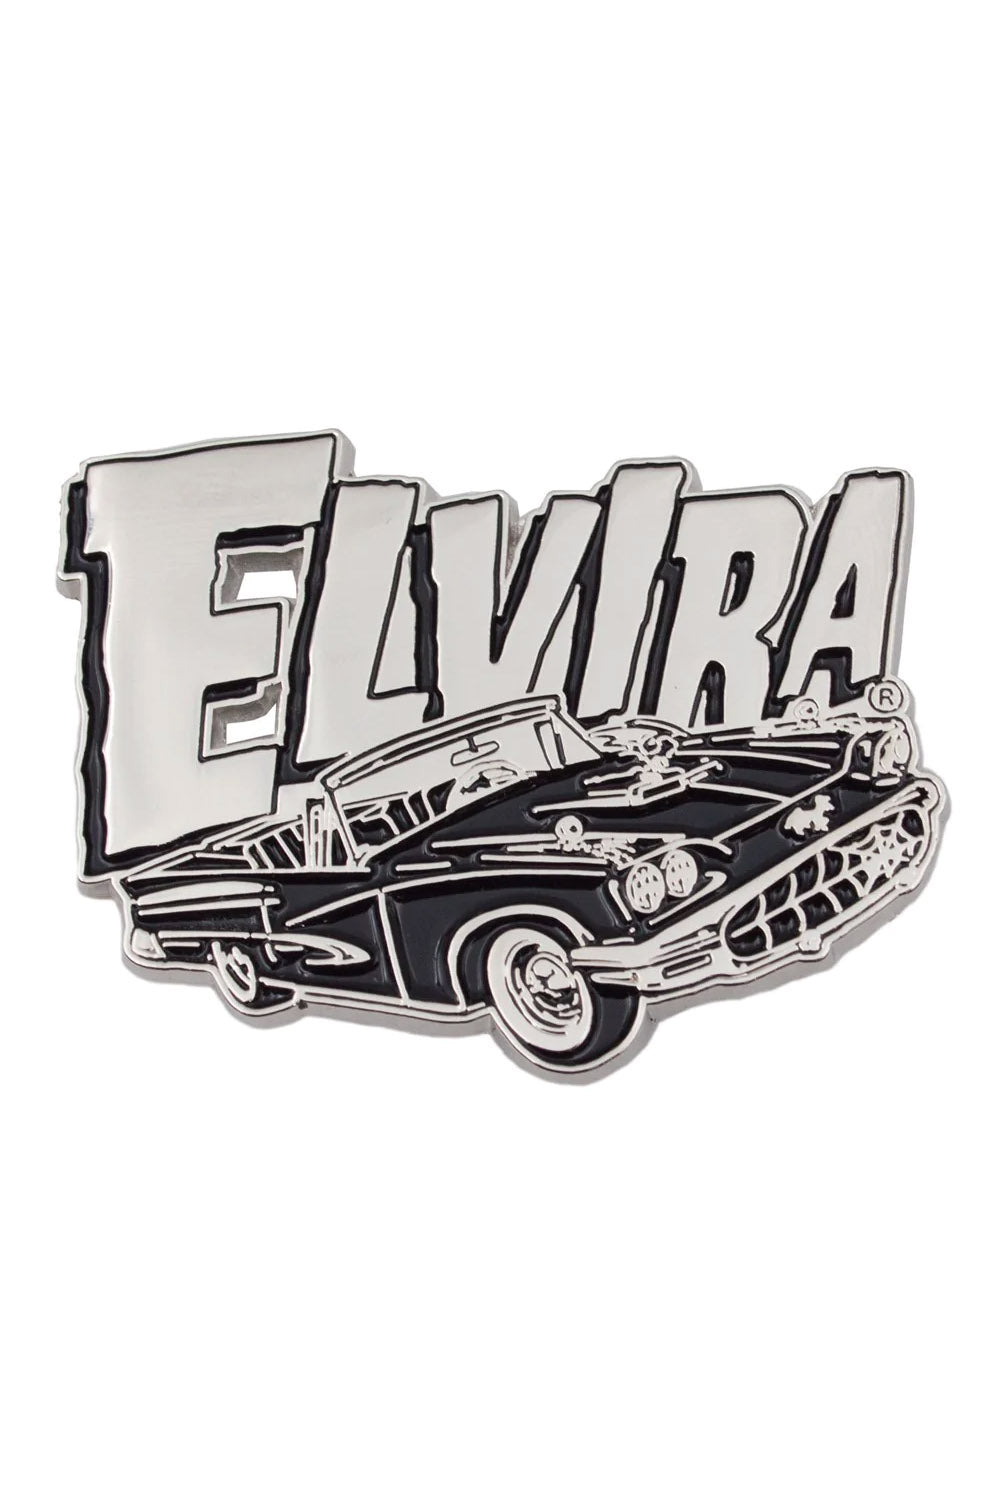 Elvira Macabre Mobile Enamel Pin